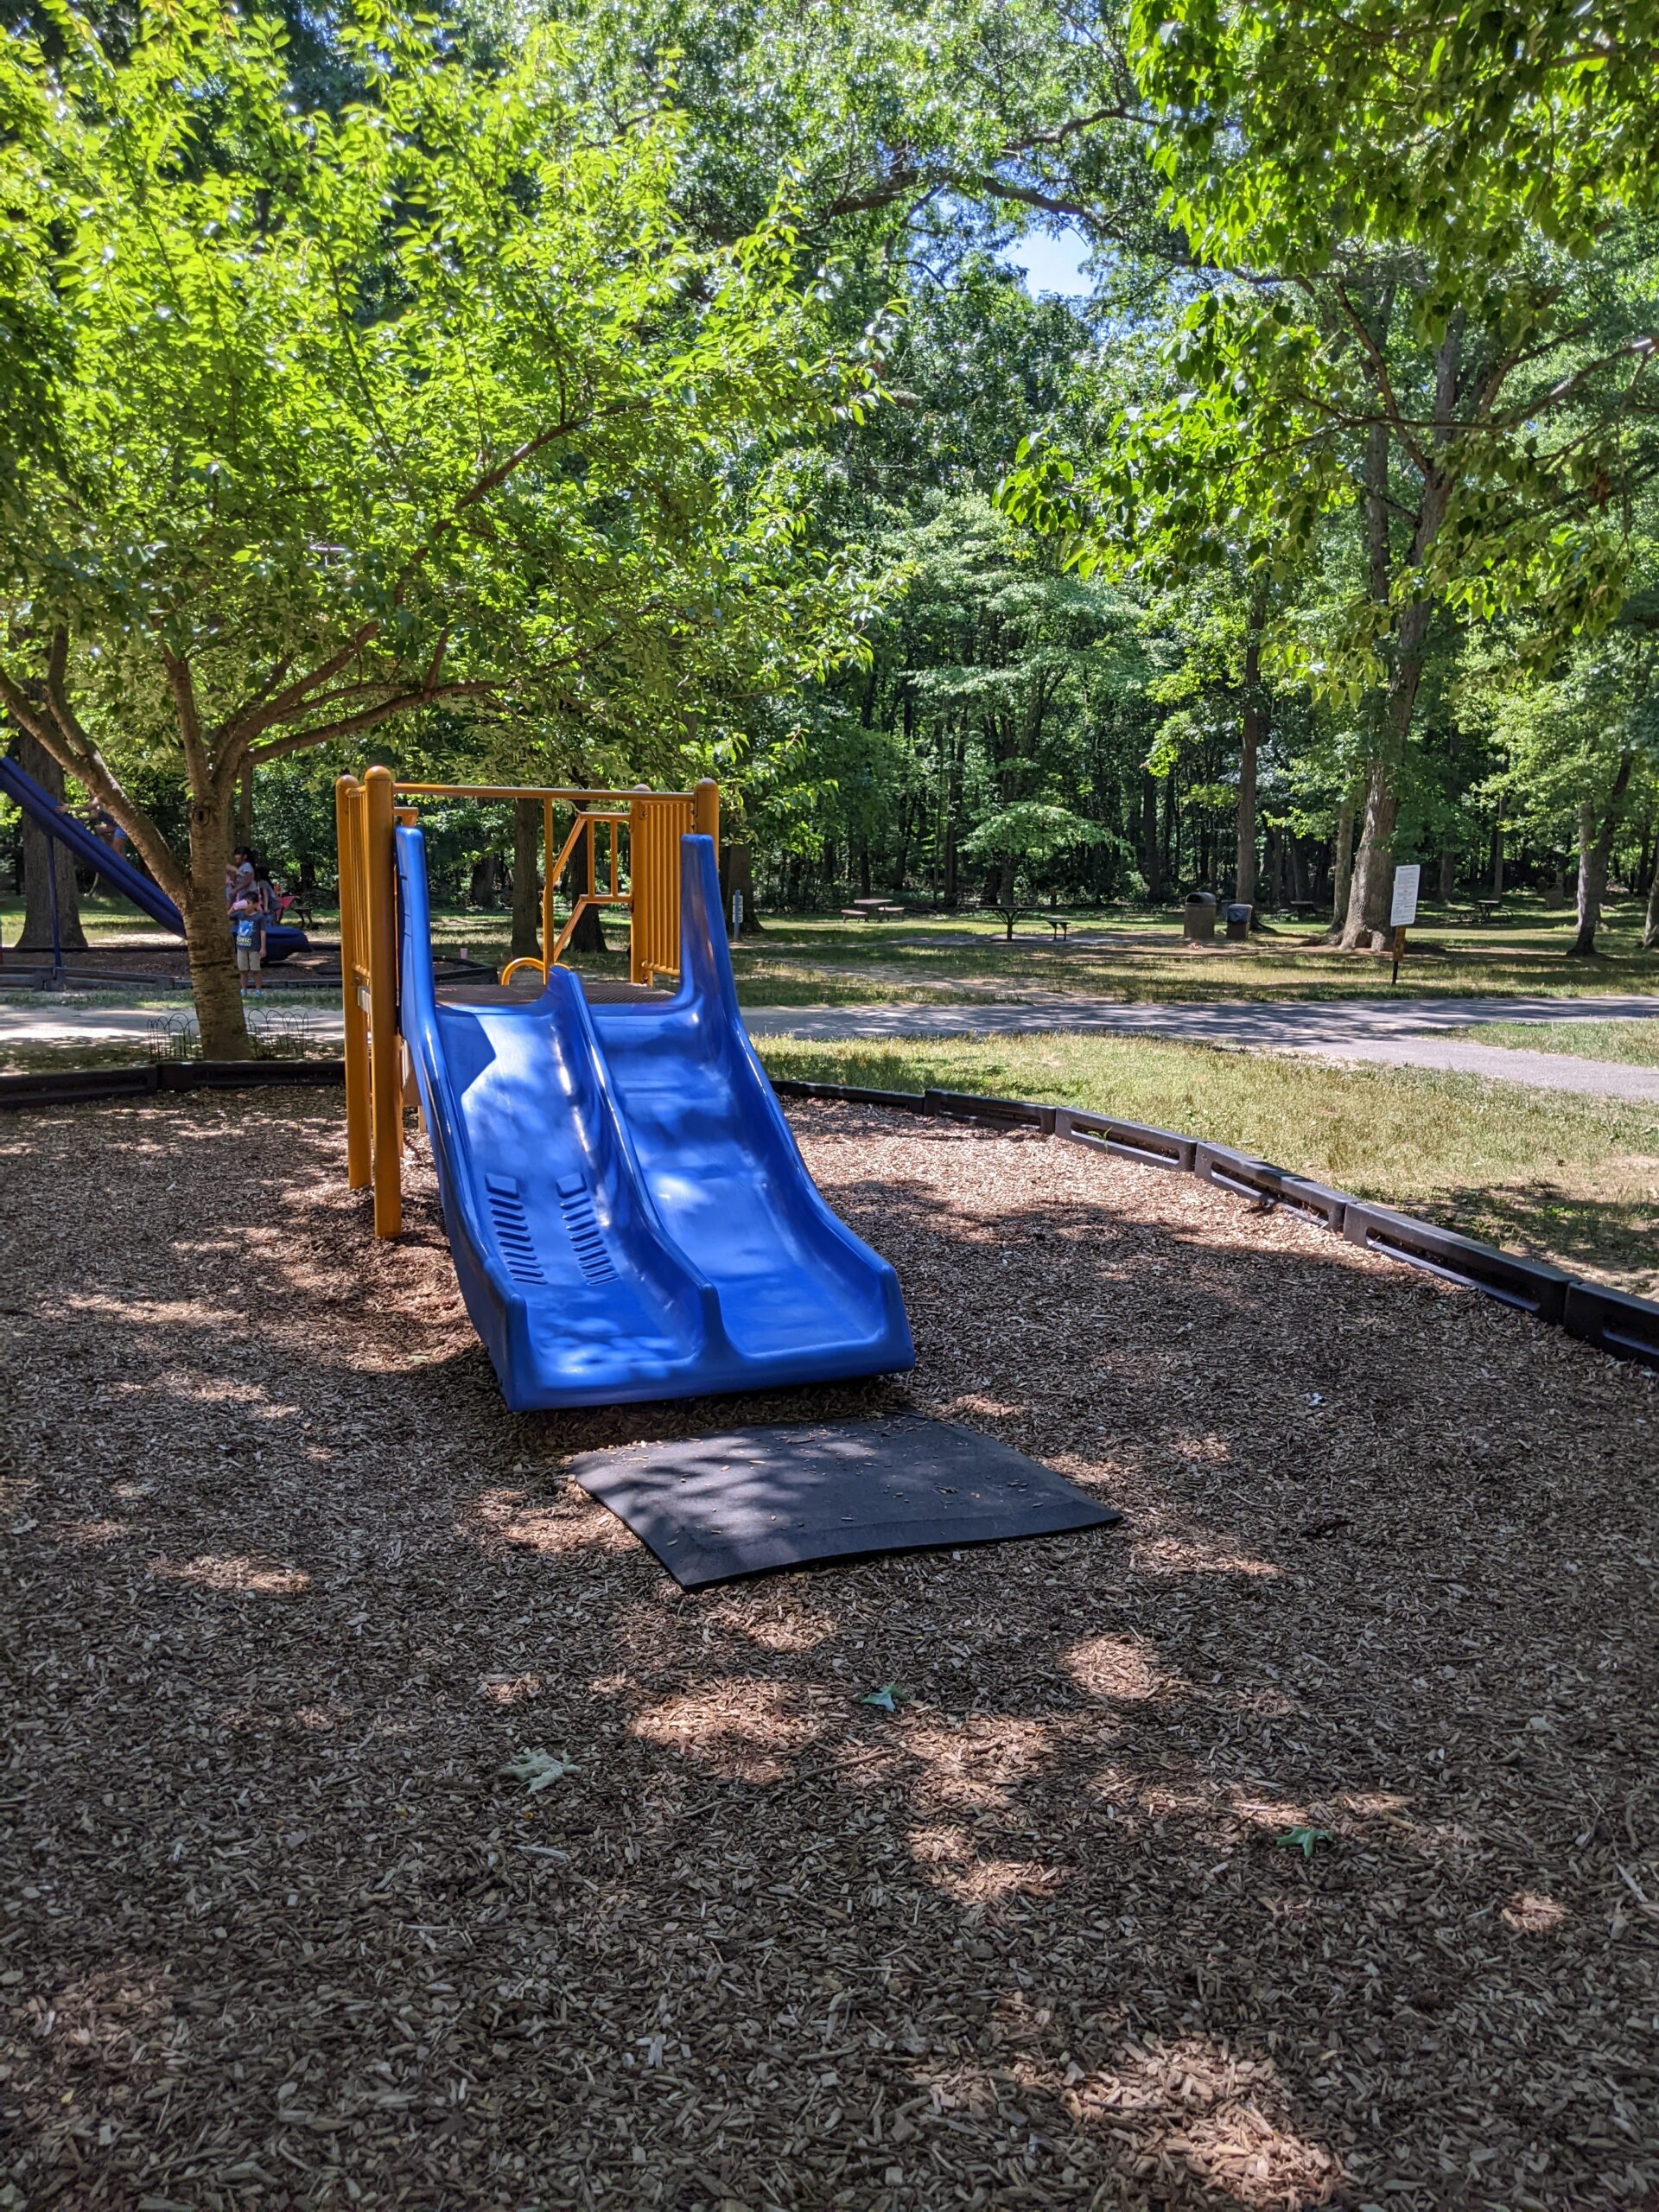 Children's Park Playground at Veteran's Park in Hamilton Township NJ - SLIDES - side by side blue slides on stand alone equipment